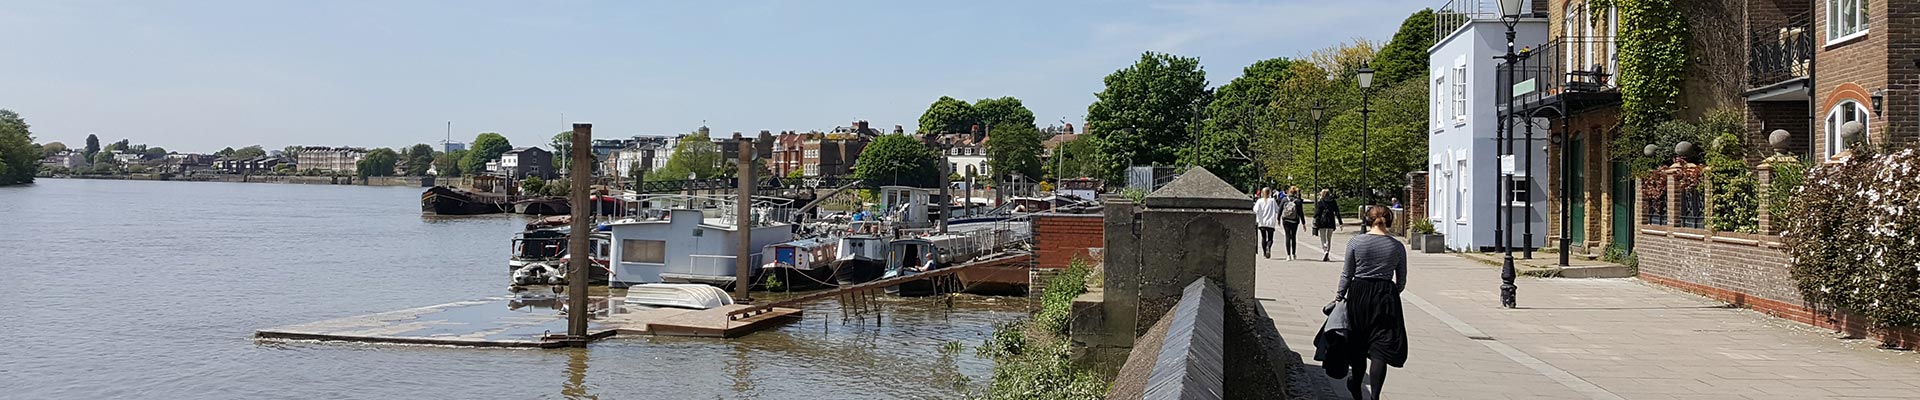 River Thames Hammersmith